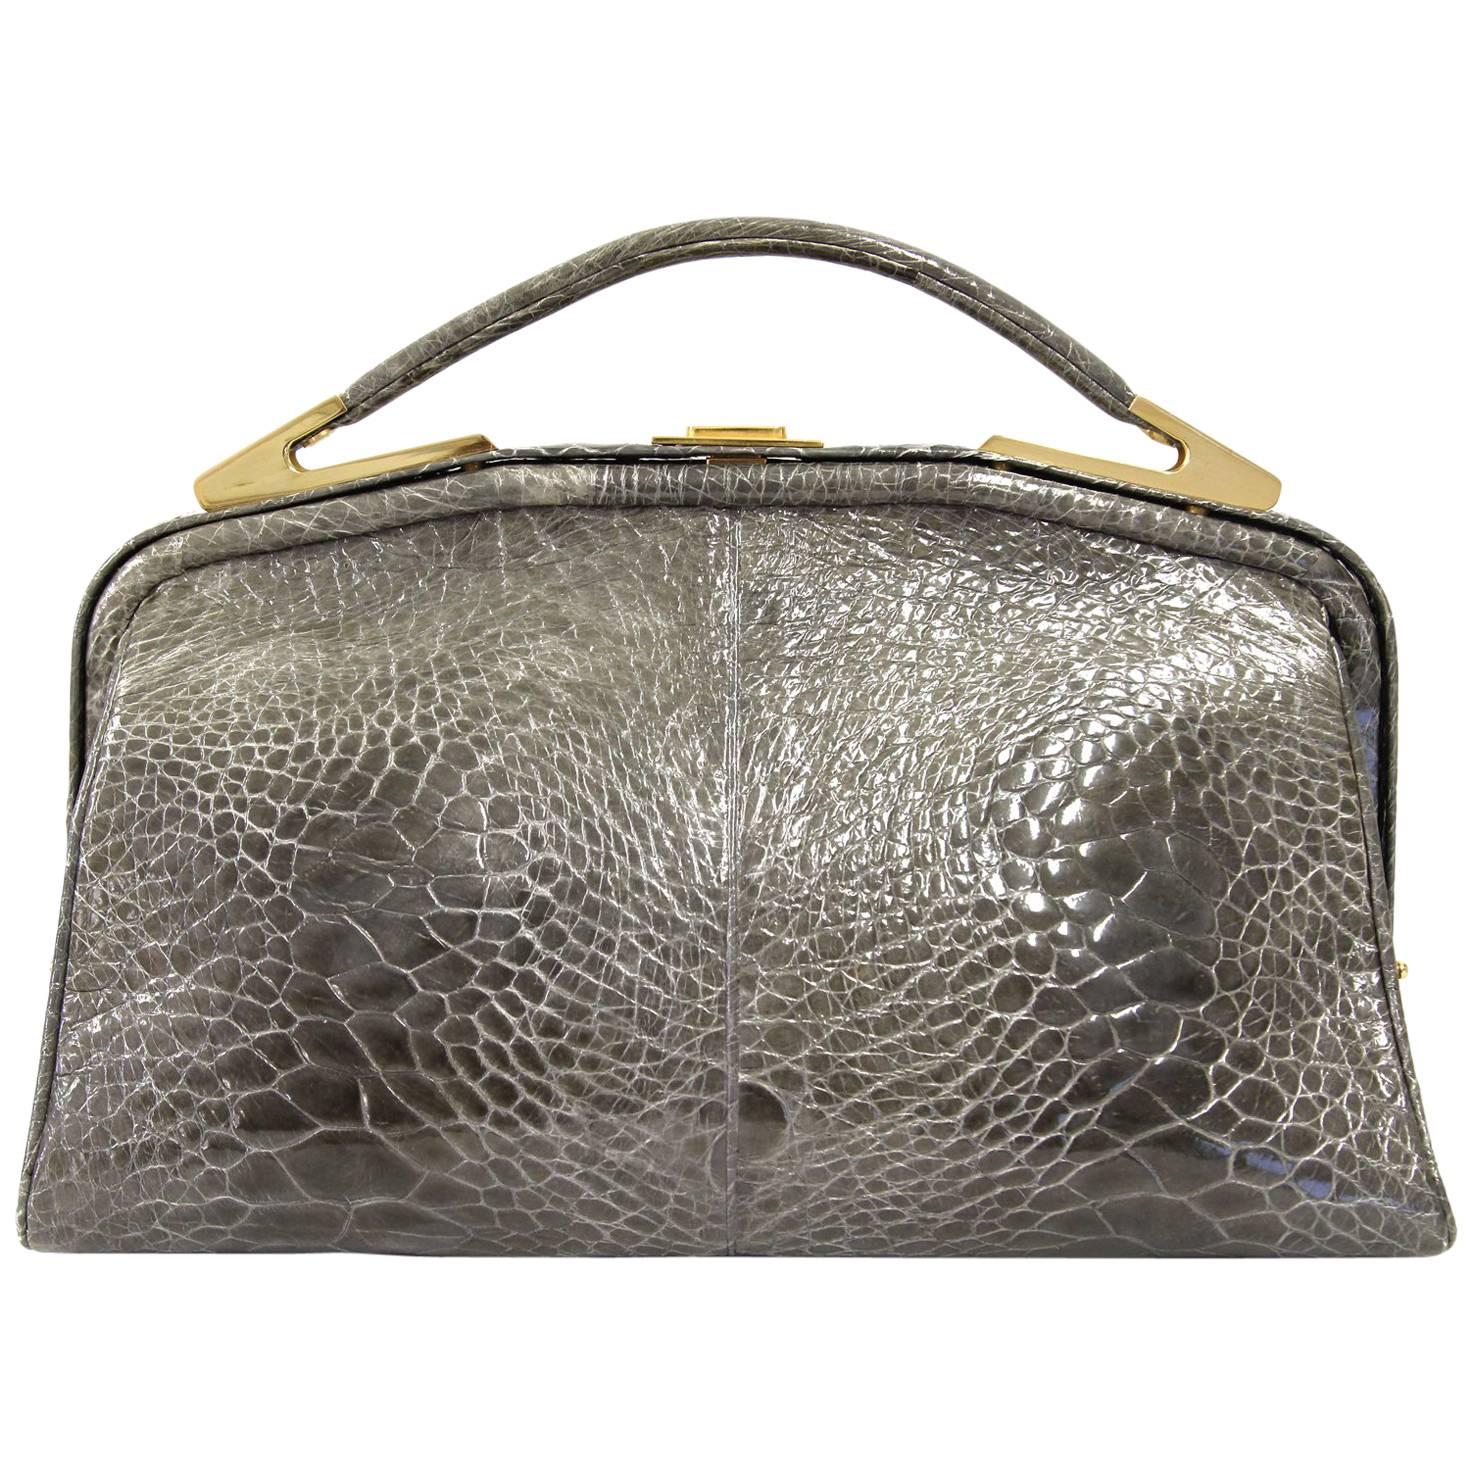 1990s Olive Green Crocodile Leather Handbag